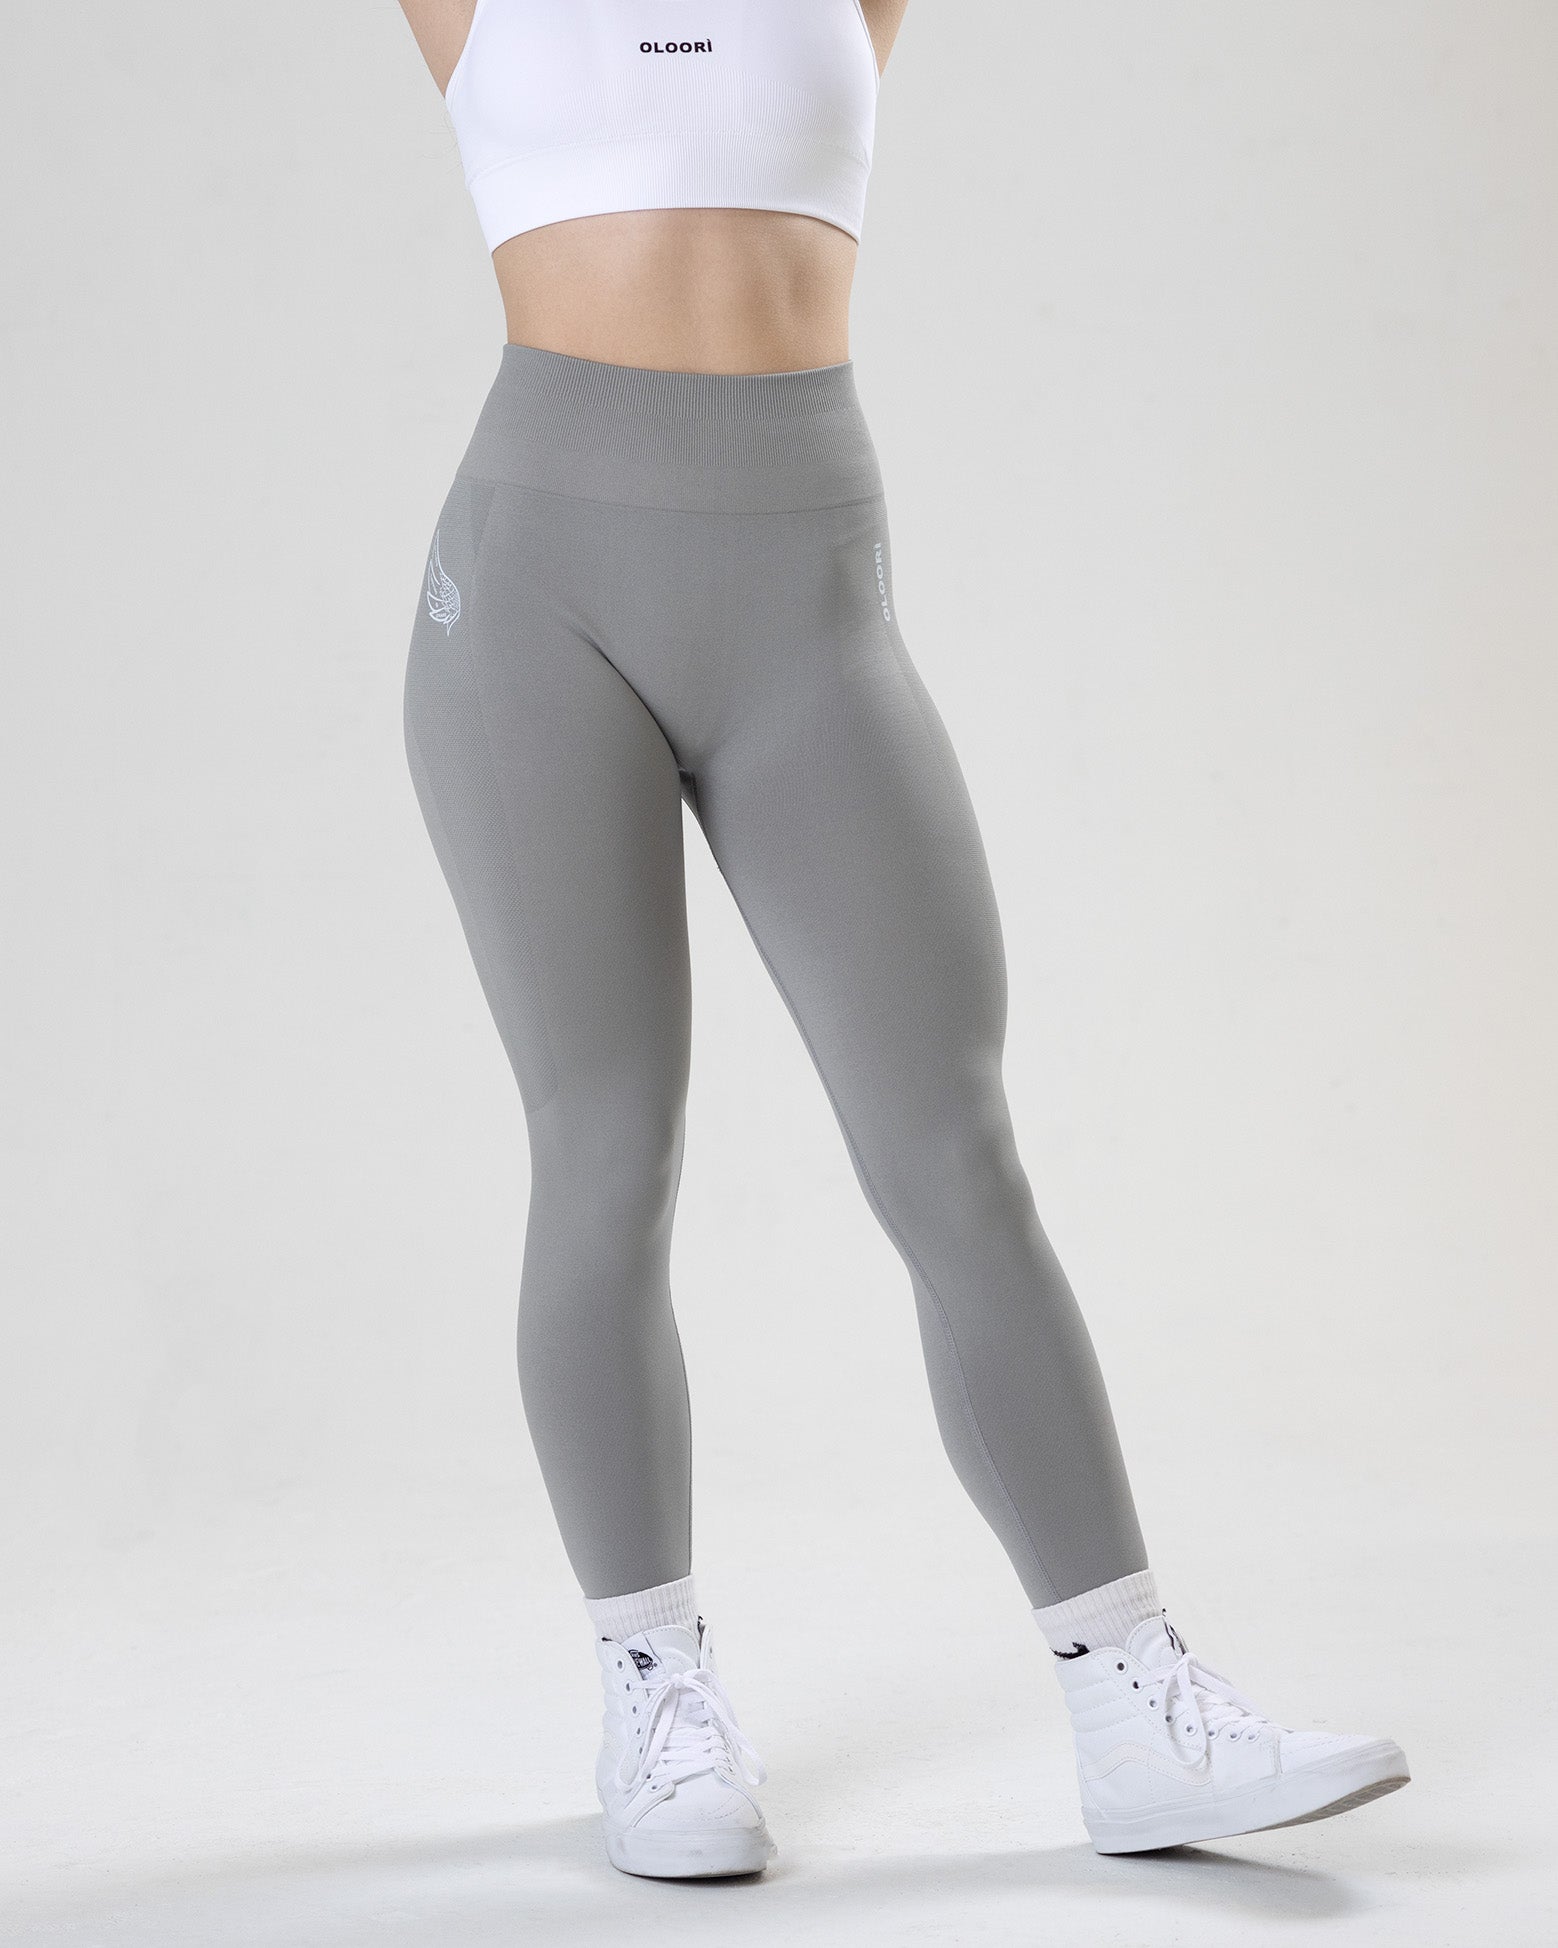 Elevate Seamless Shorts  Scrunch Bum Workout Shorts - Oloori